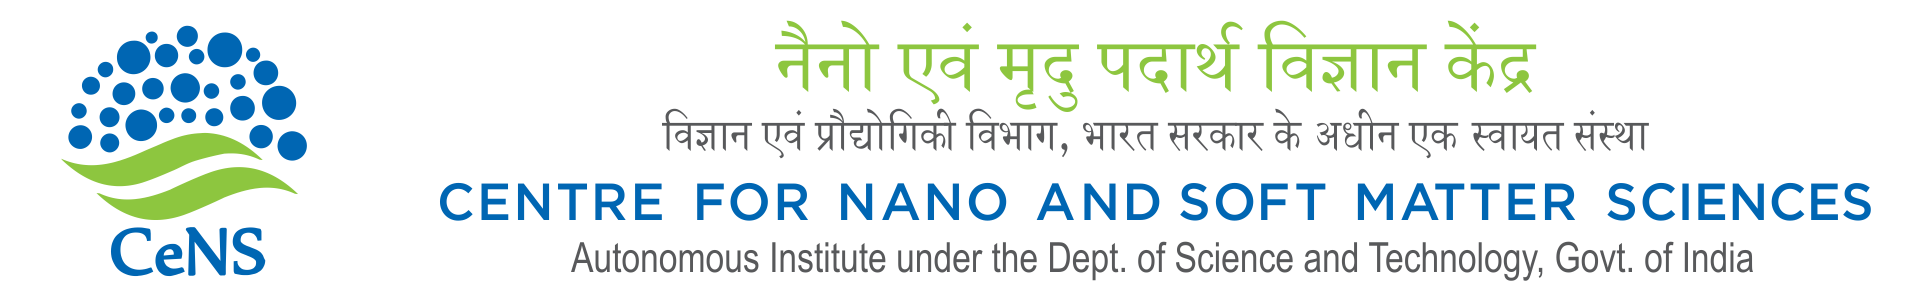 Centre for Nano and Soft Matter Sciences